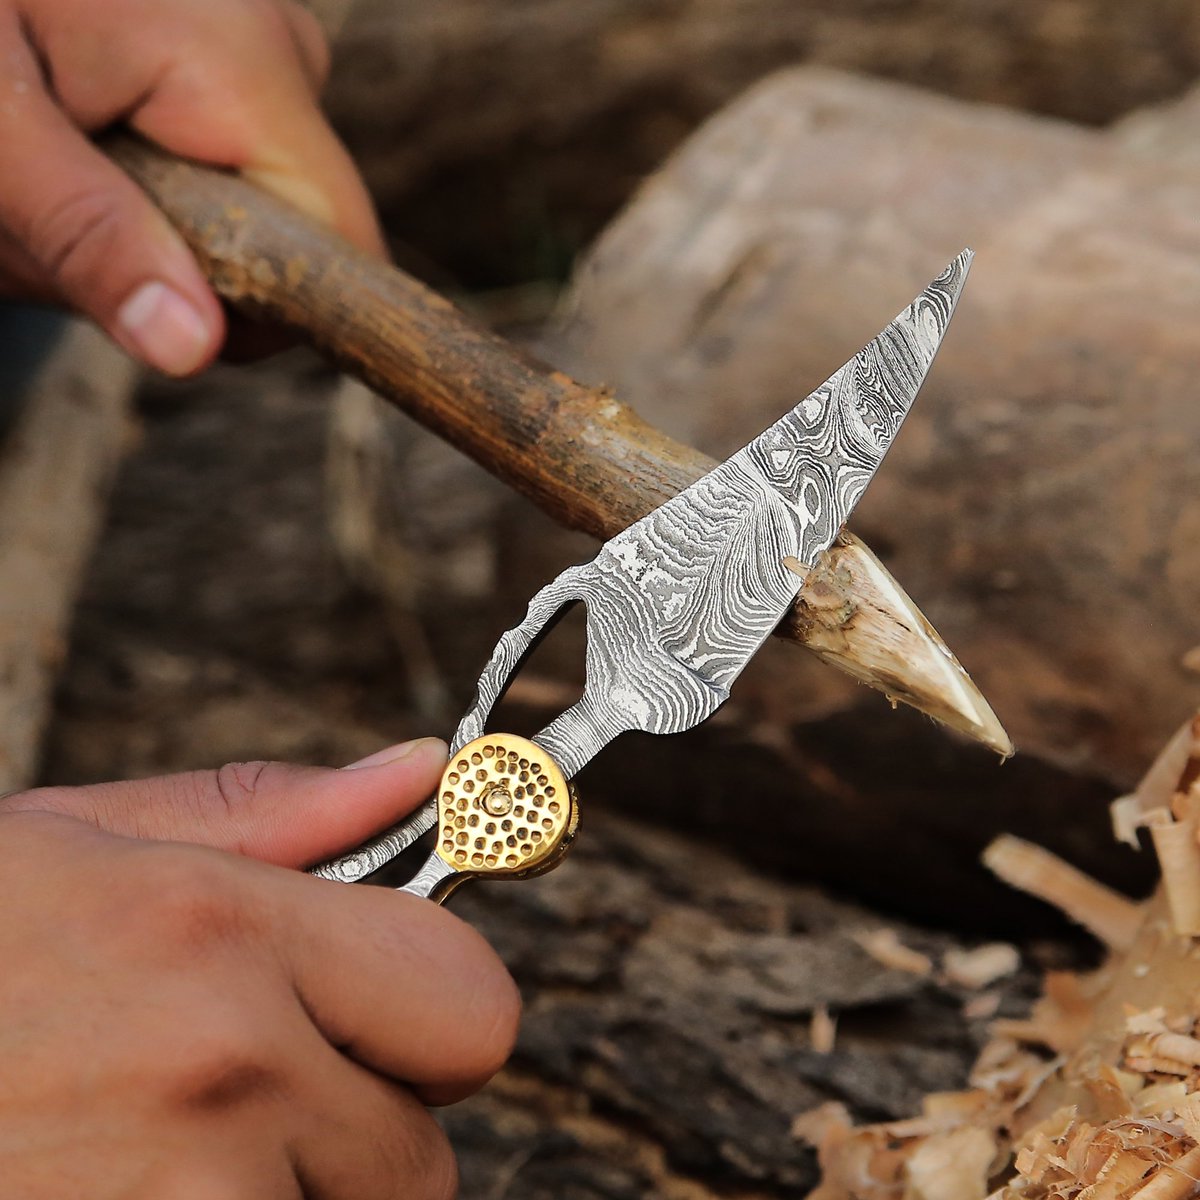 Unlock the potential of adventure with our Damascus Folding Knife. Precision, versatility, and craftsmanship in every cut. 🪓🌲 #FoldingKnife #OutdoorAdventure #Craftsmanship #knife #knifeporn #knifecommunity #knifenut #knifestagram #knifemaking #knifepics #knifesale #knifelife